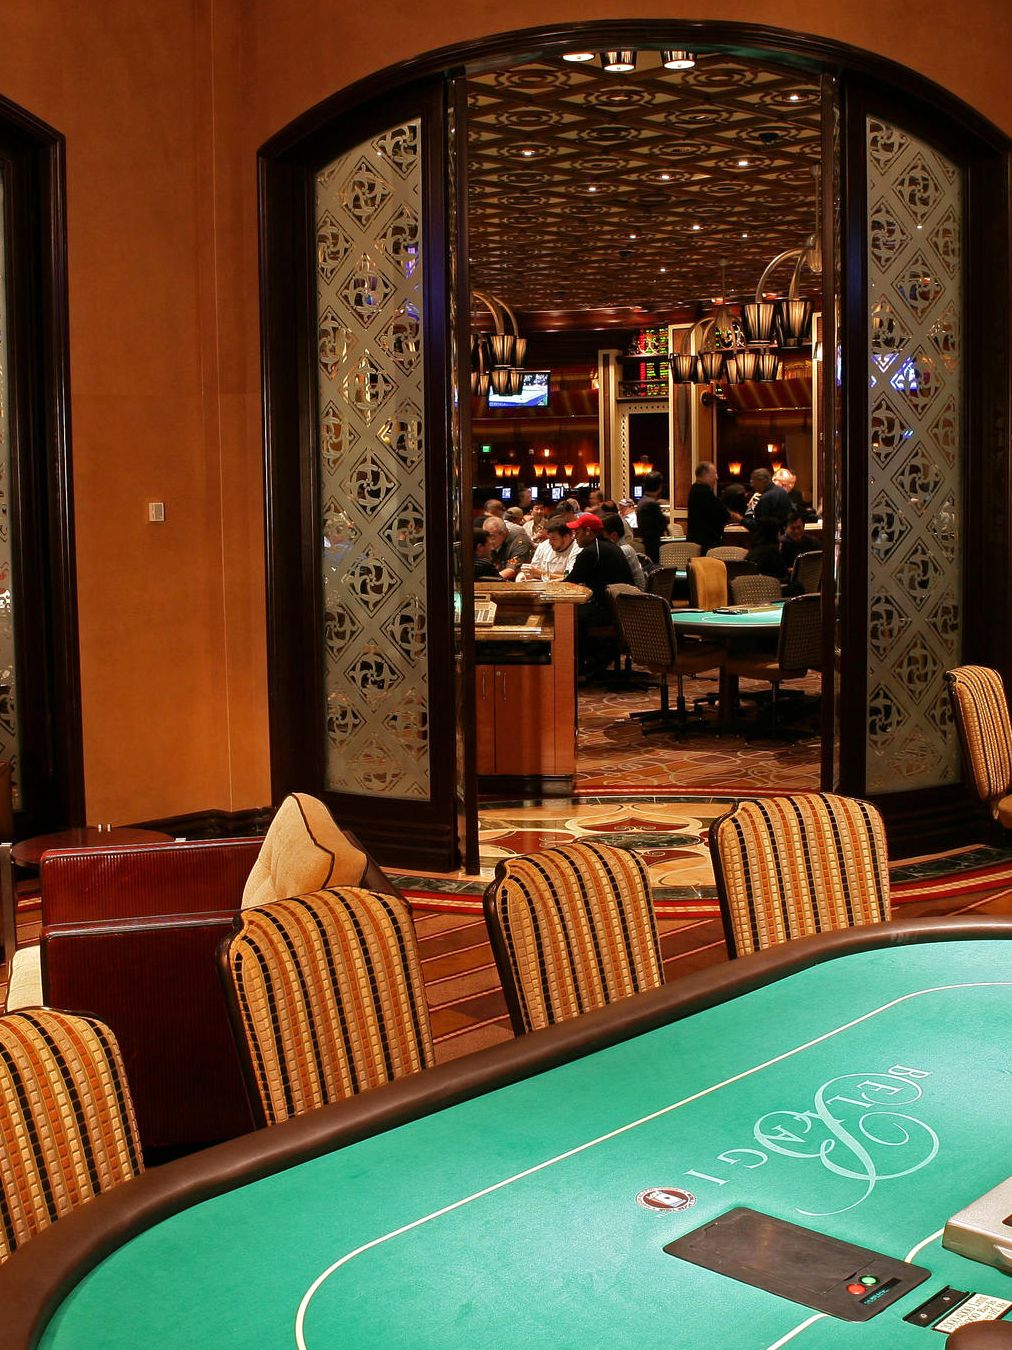 12 best casinos in Las Vegas | CNN